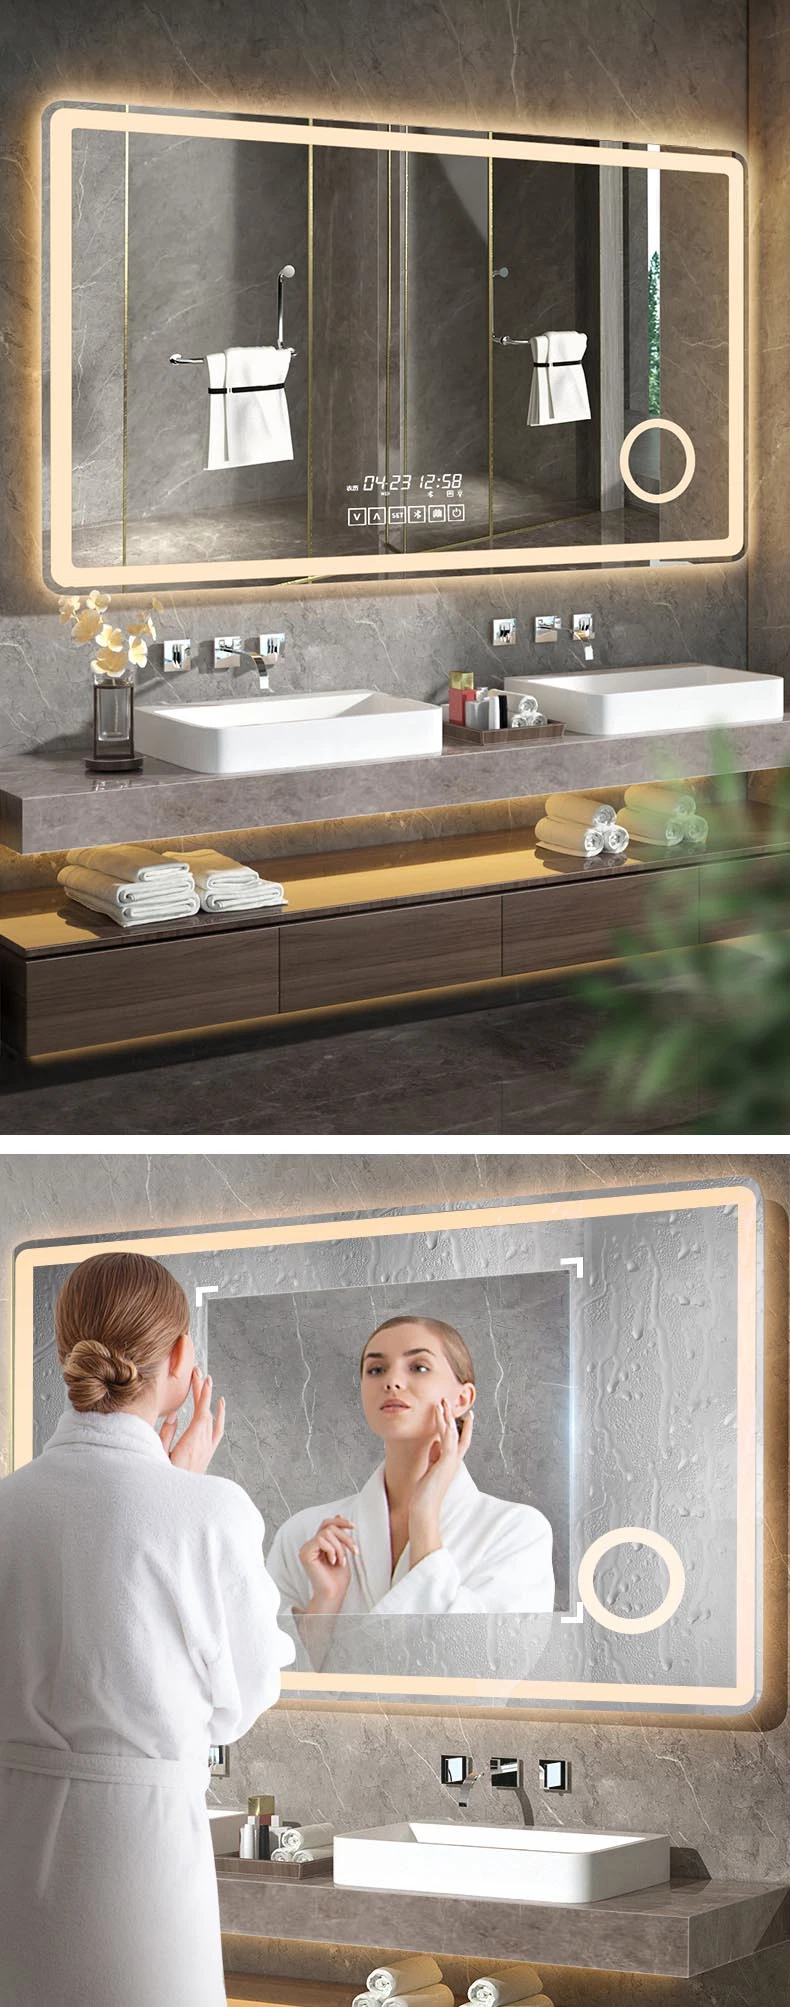 Illuminated Smart Sensor Touch LED Lighting Bathroom Mirror